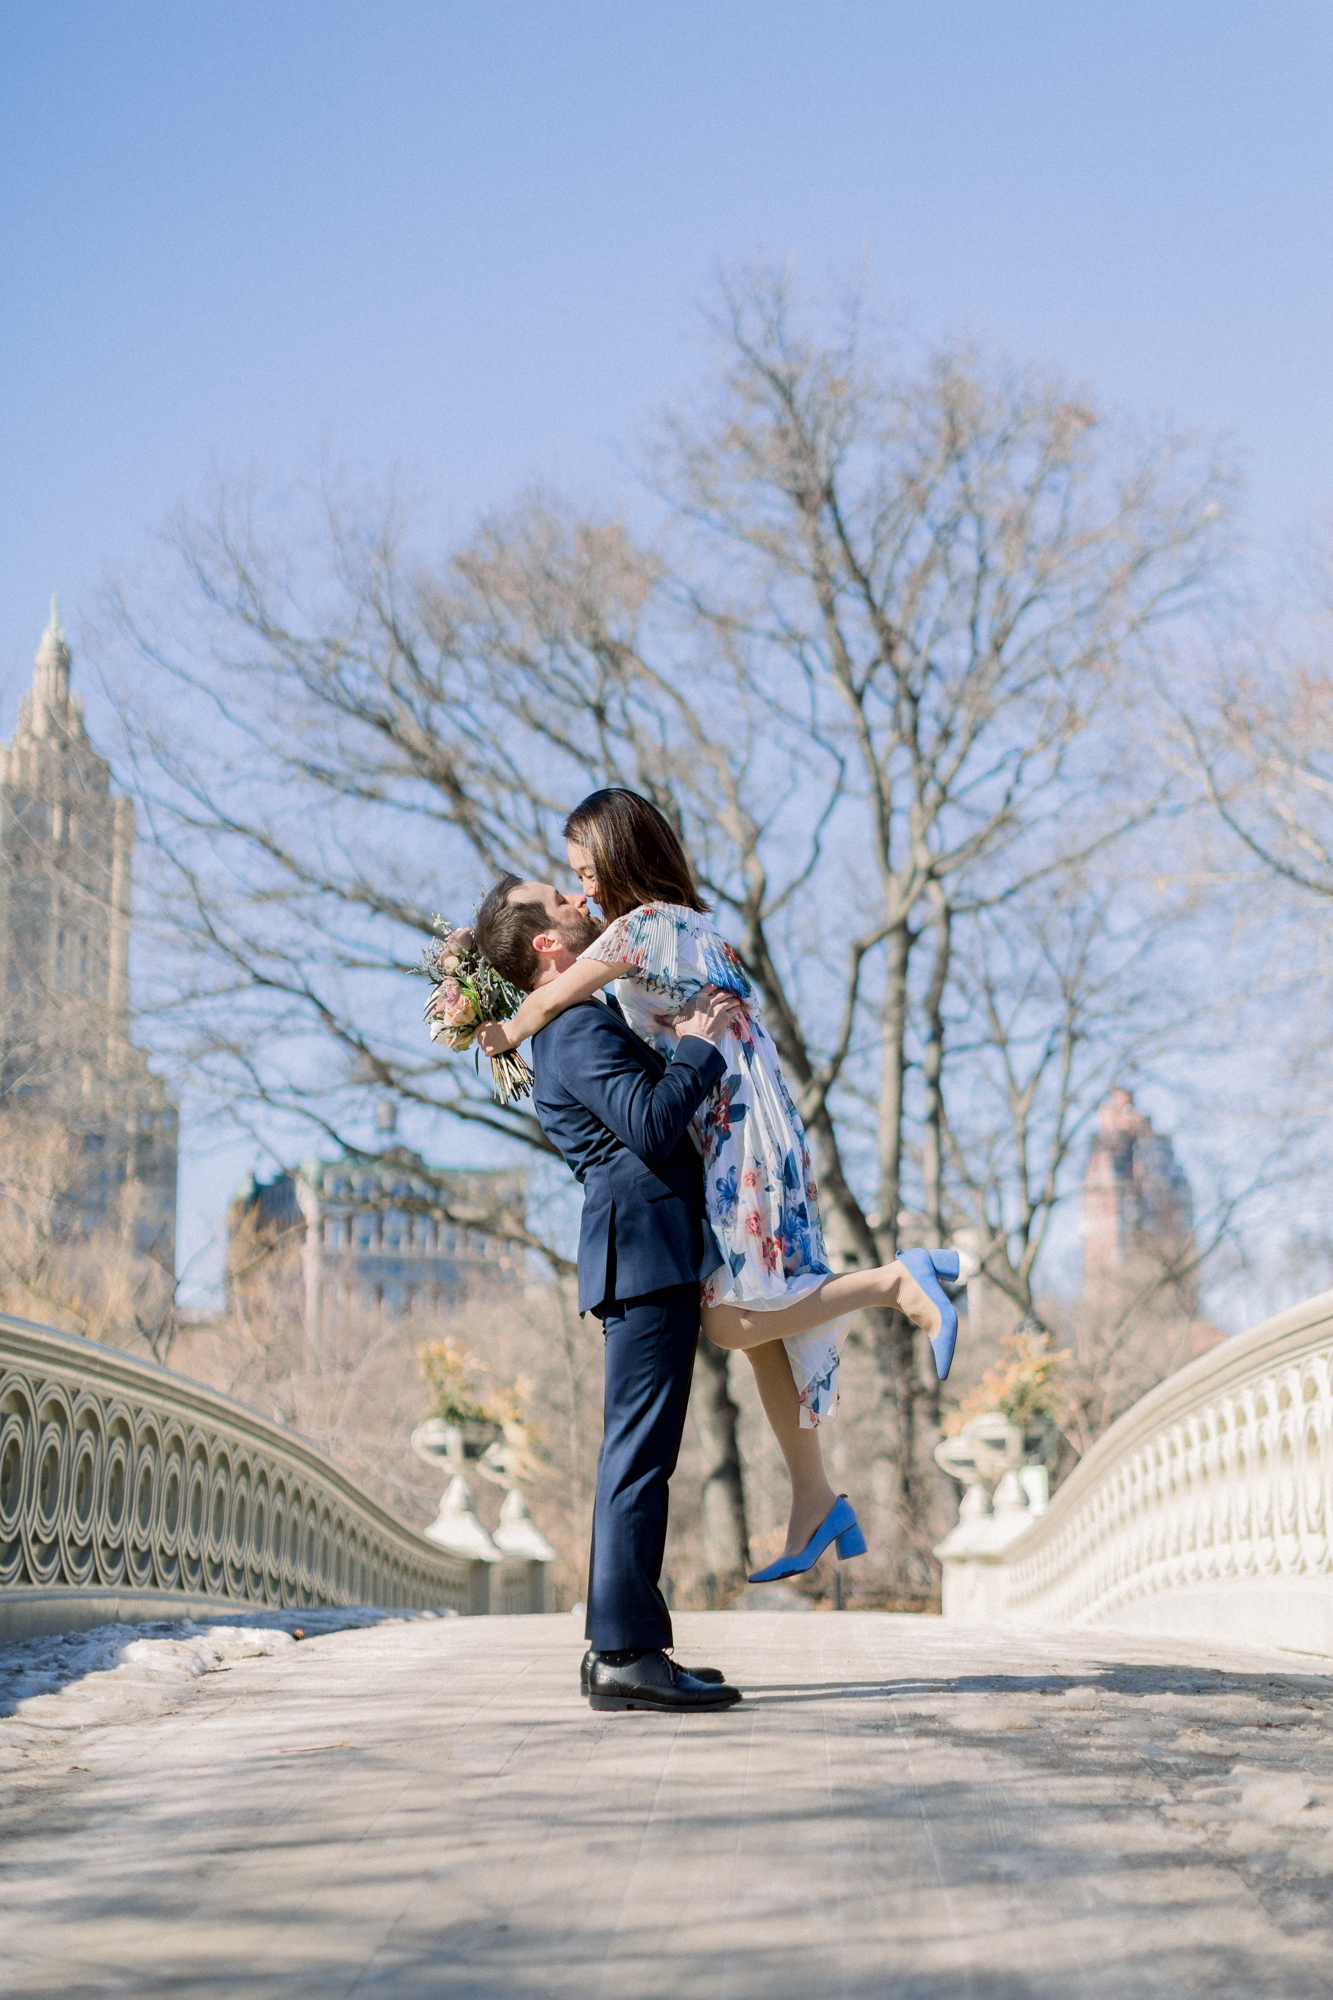 Timeless Central Park Wedding Photos in Wintery New York